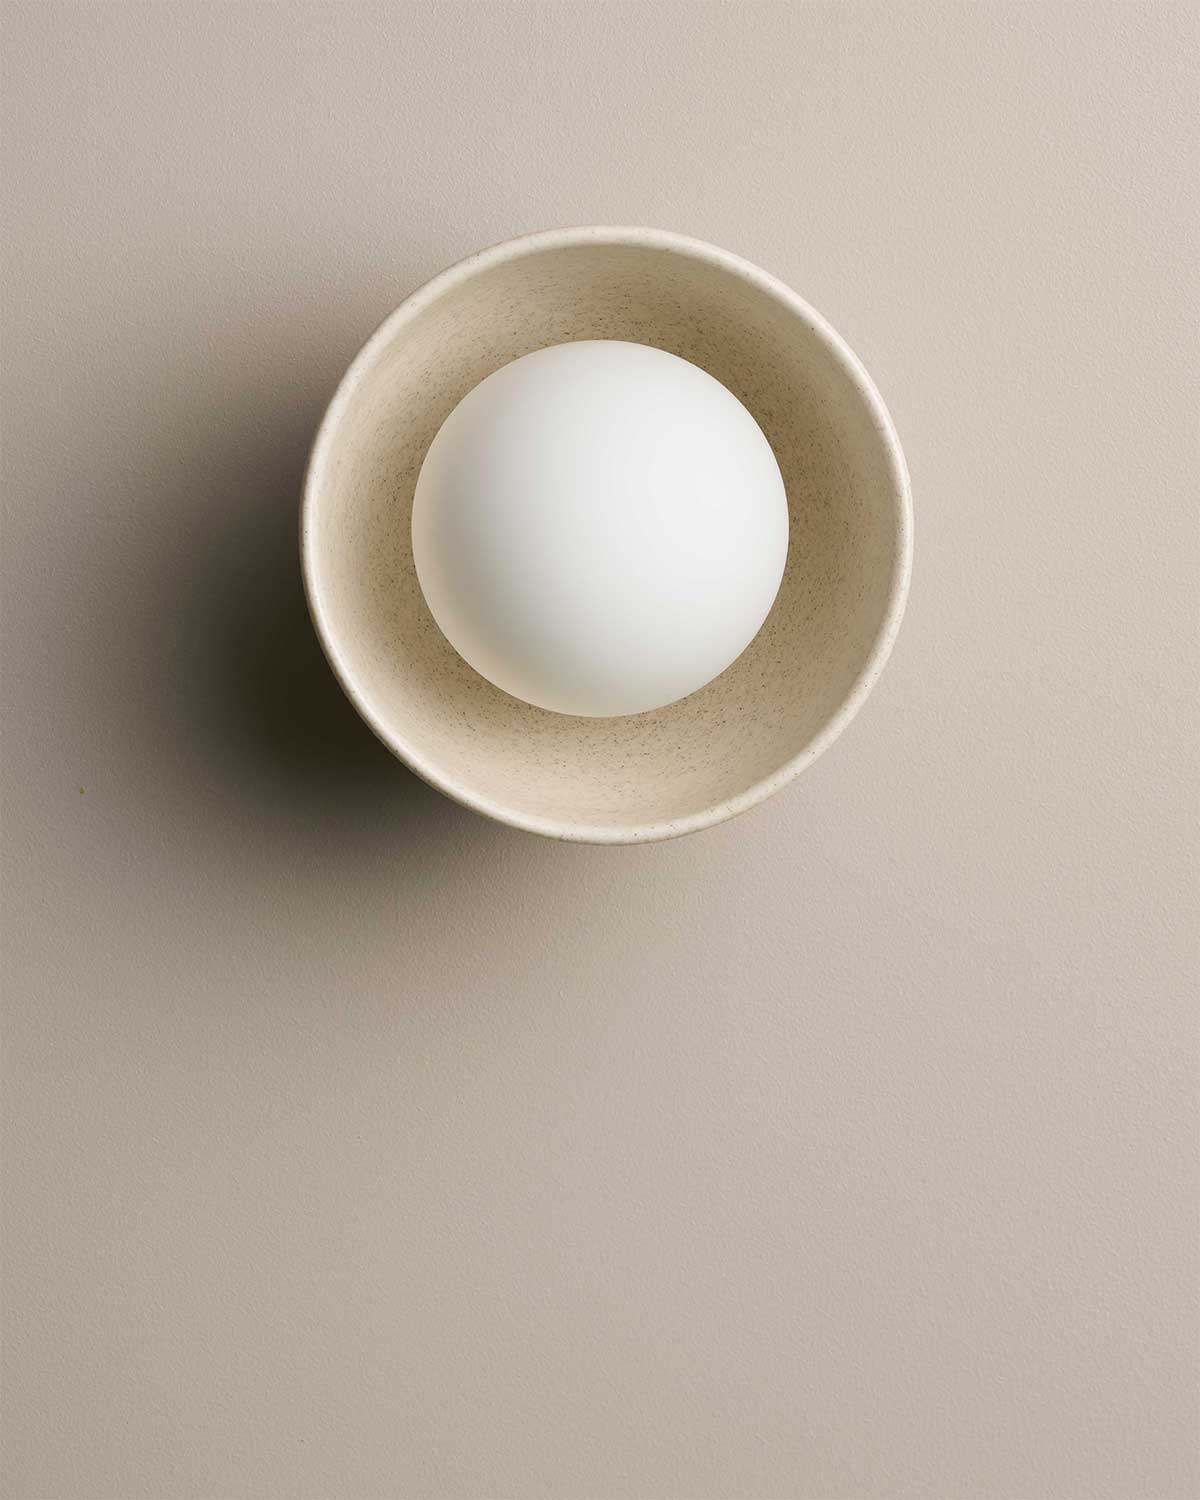 Ceramic Wall Bowl Sconce Light / Poppyseed